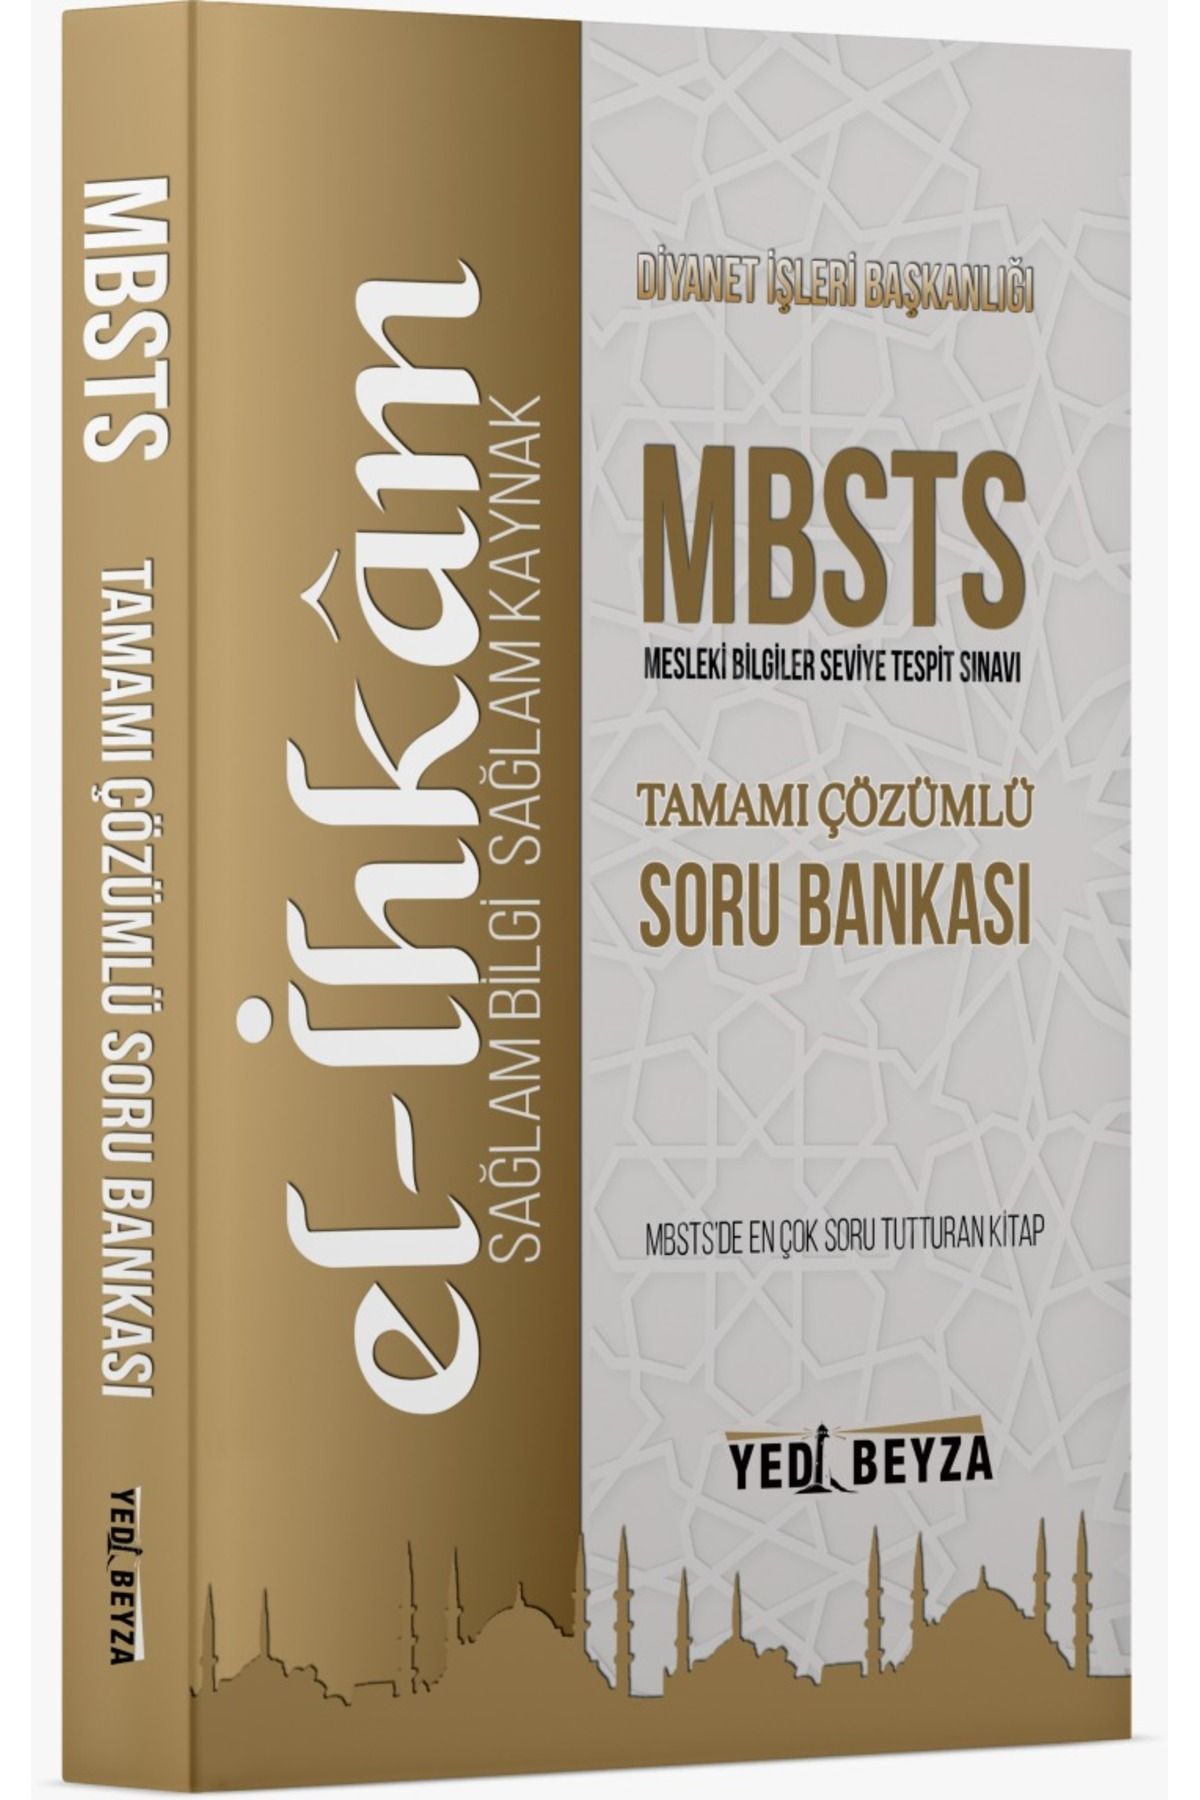 Yedi Beyza Yayınları Mbsts El-ihkam Tamamı Çözümlü Soru Bankası Mehmet Ümitli